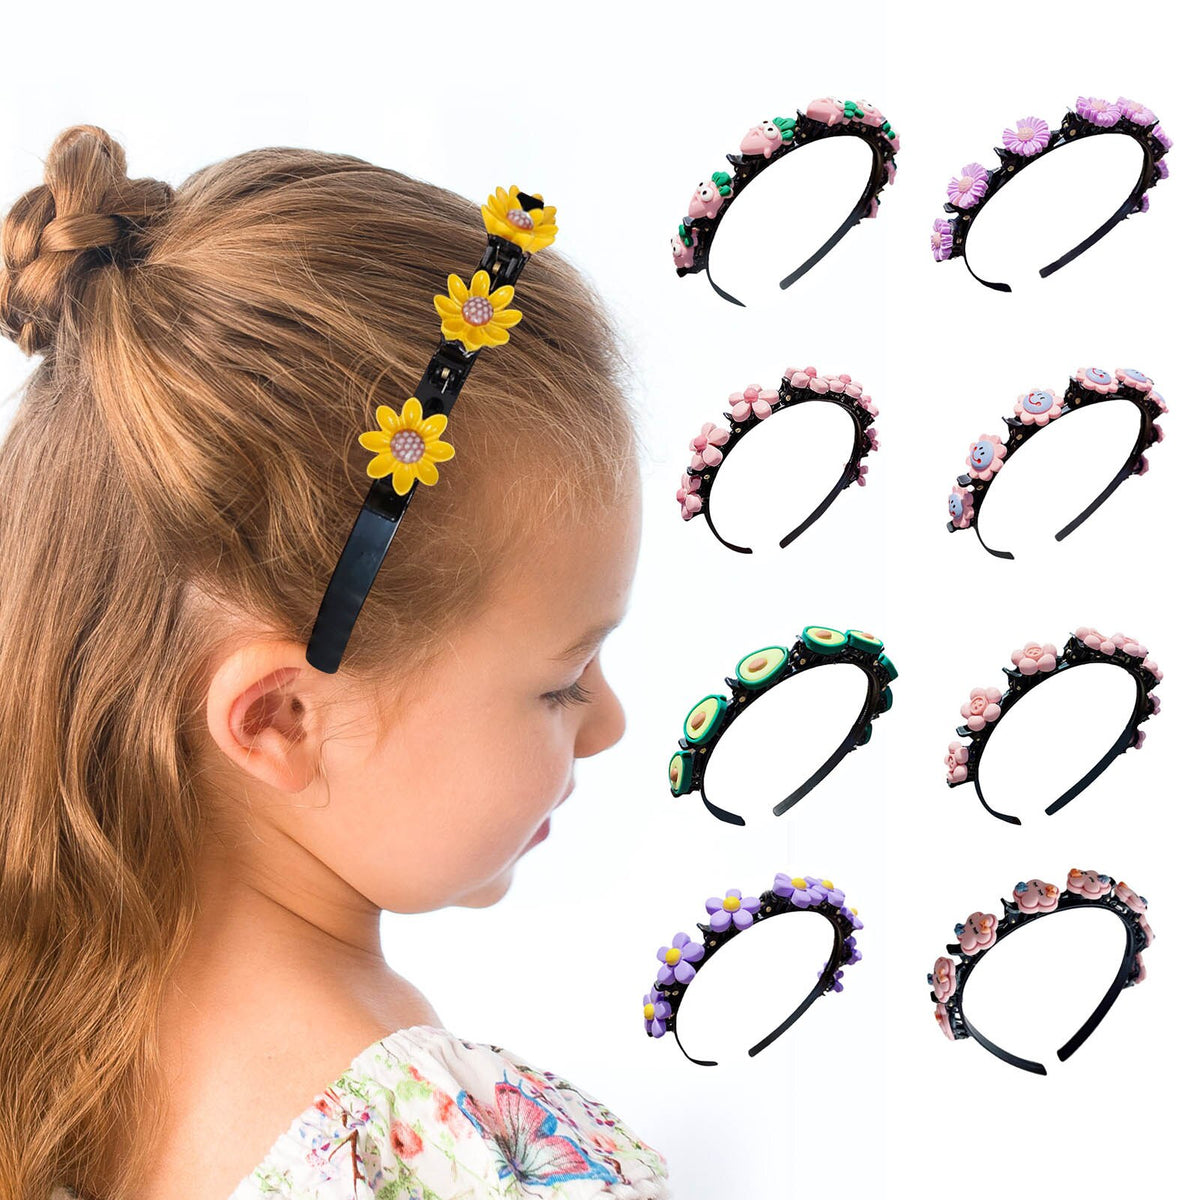 Hairpin 9pcs Kids Hair Hoop With Clips Double Bangs Hairstyle Hairpin Headband Cute Flower Broken Hair Barrette Headdress